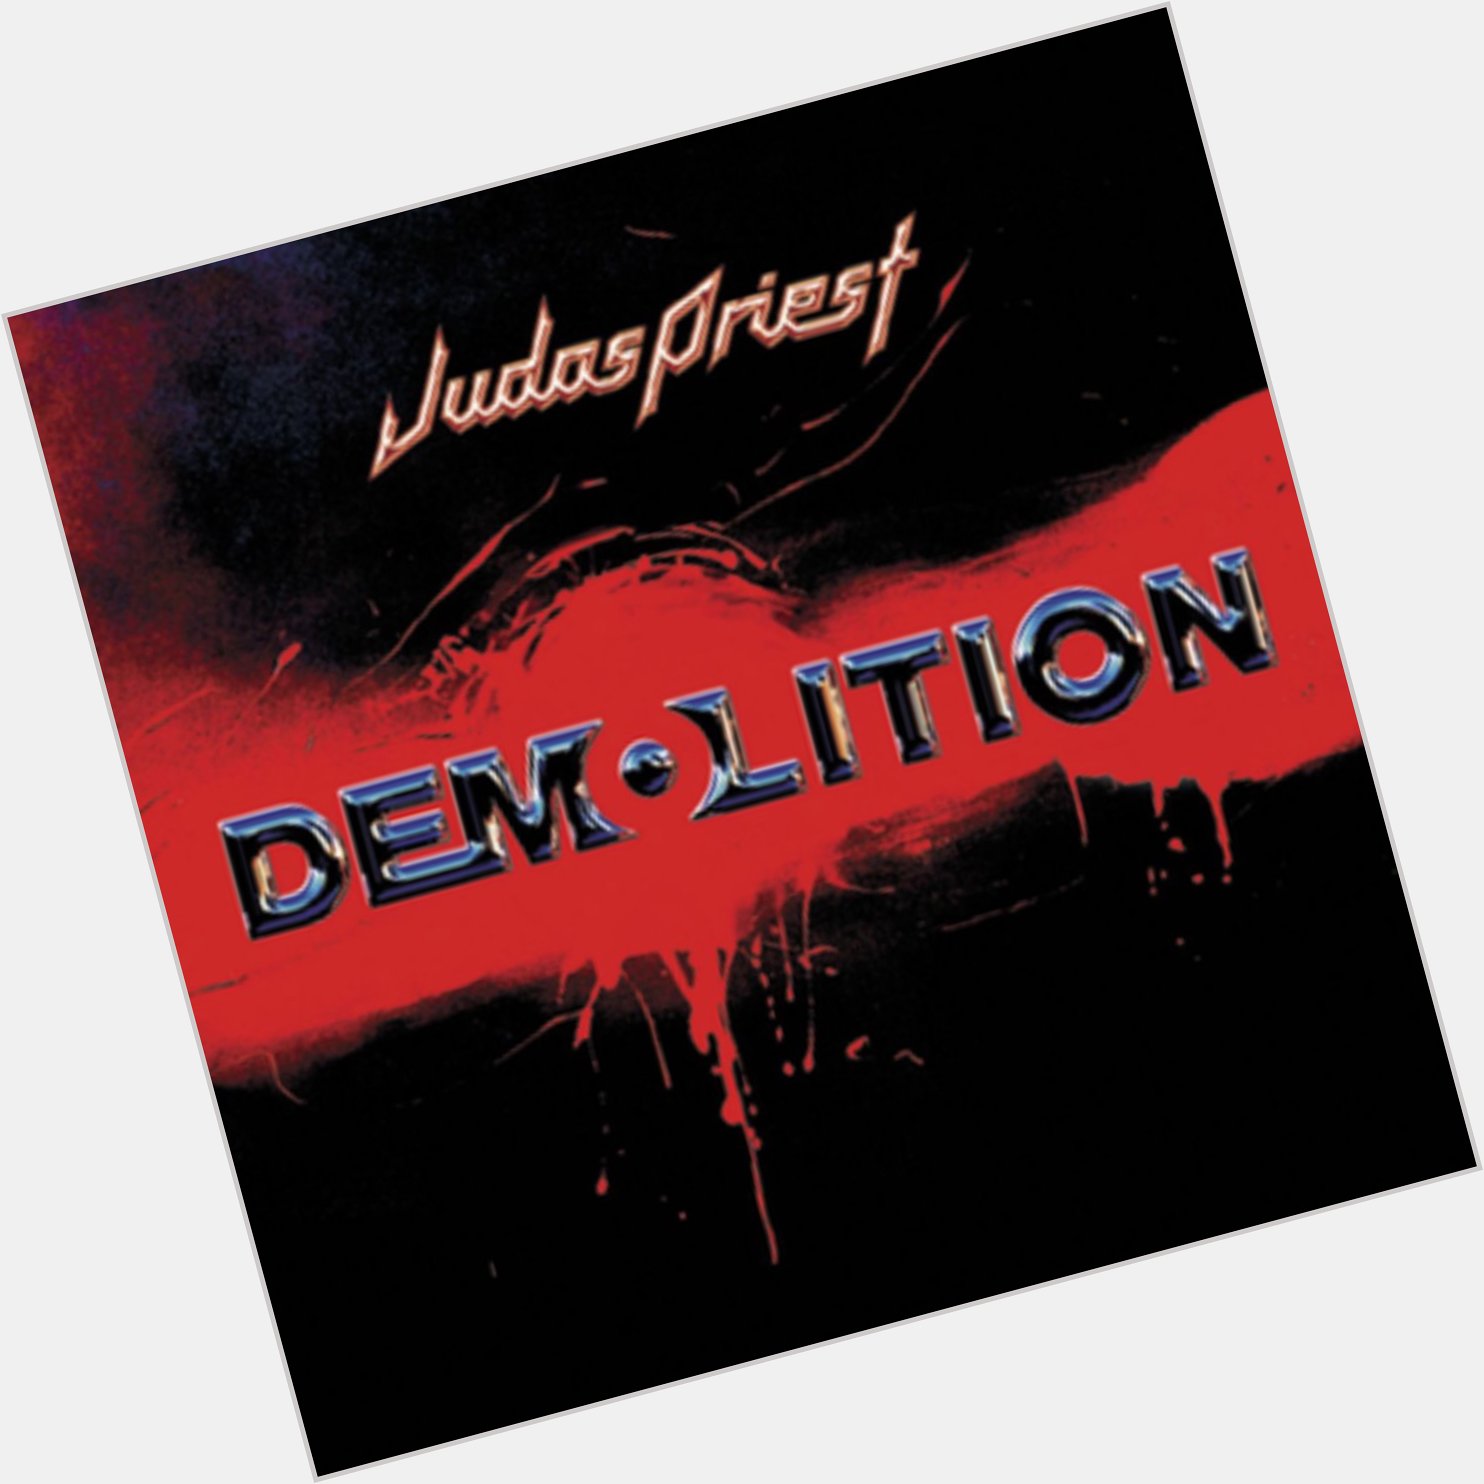  Lost And Found
from Demolition [Bonus Track]
by Judas Priest

Happy Birthday, Tim \"Ripper\" Owens 